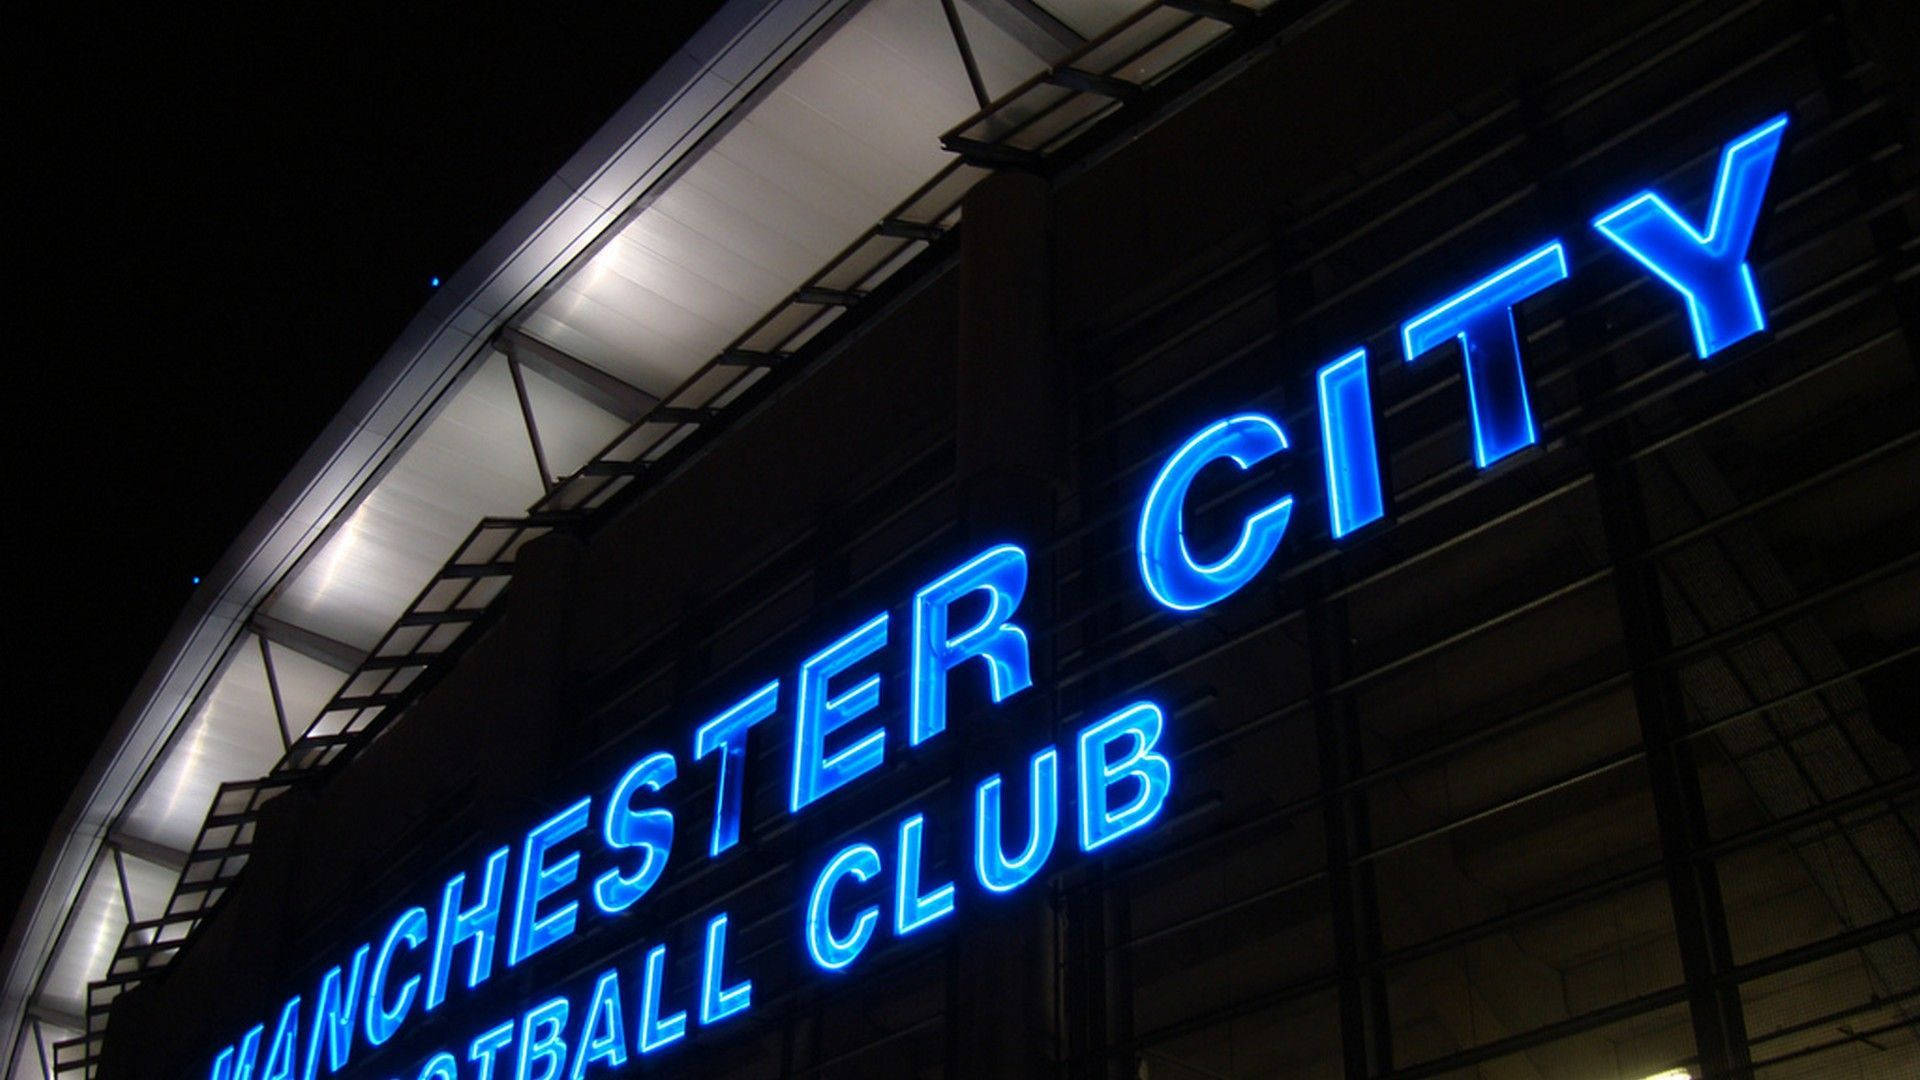 Download Manchester City Stadium Neon Sign Wallpaper